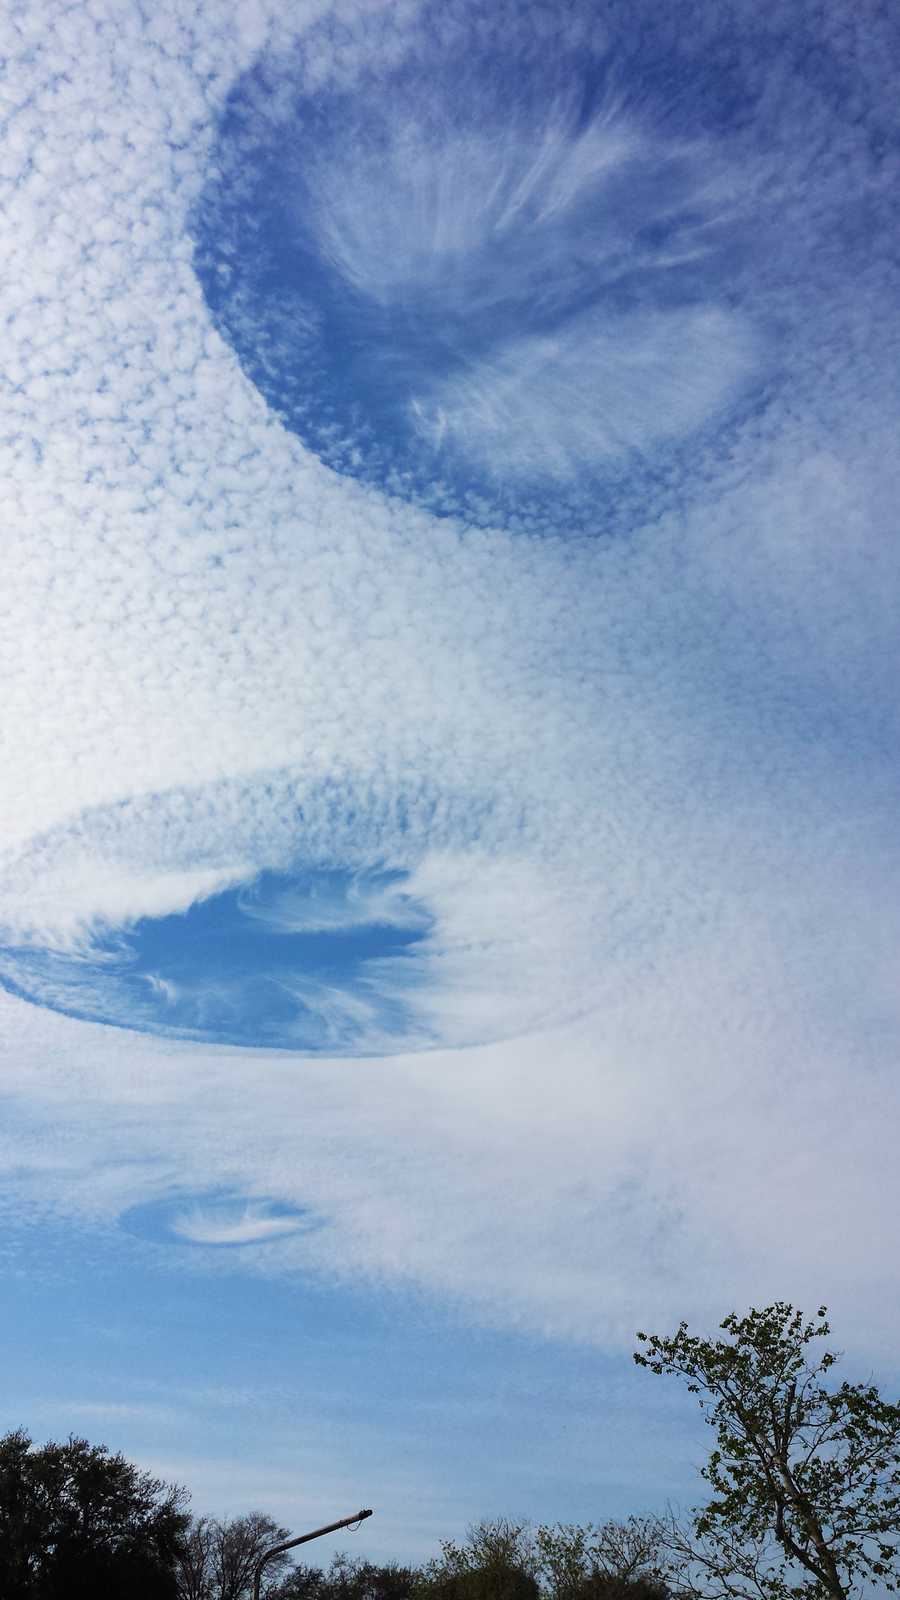 Viewer Photos: 'Strange' clouds over Okeechobee